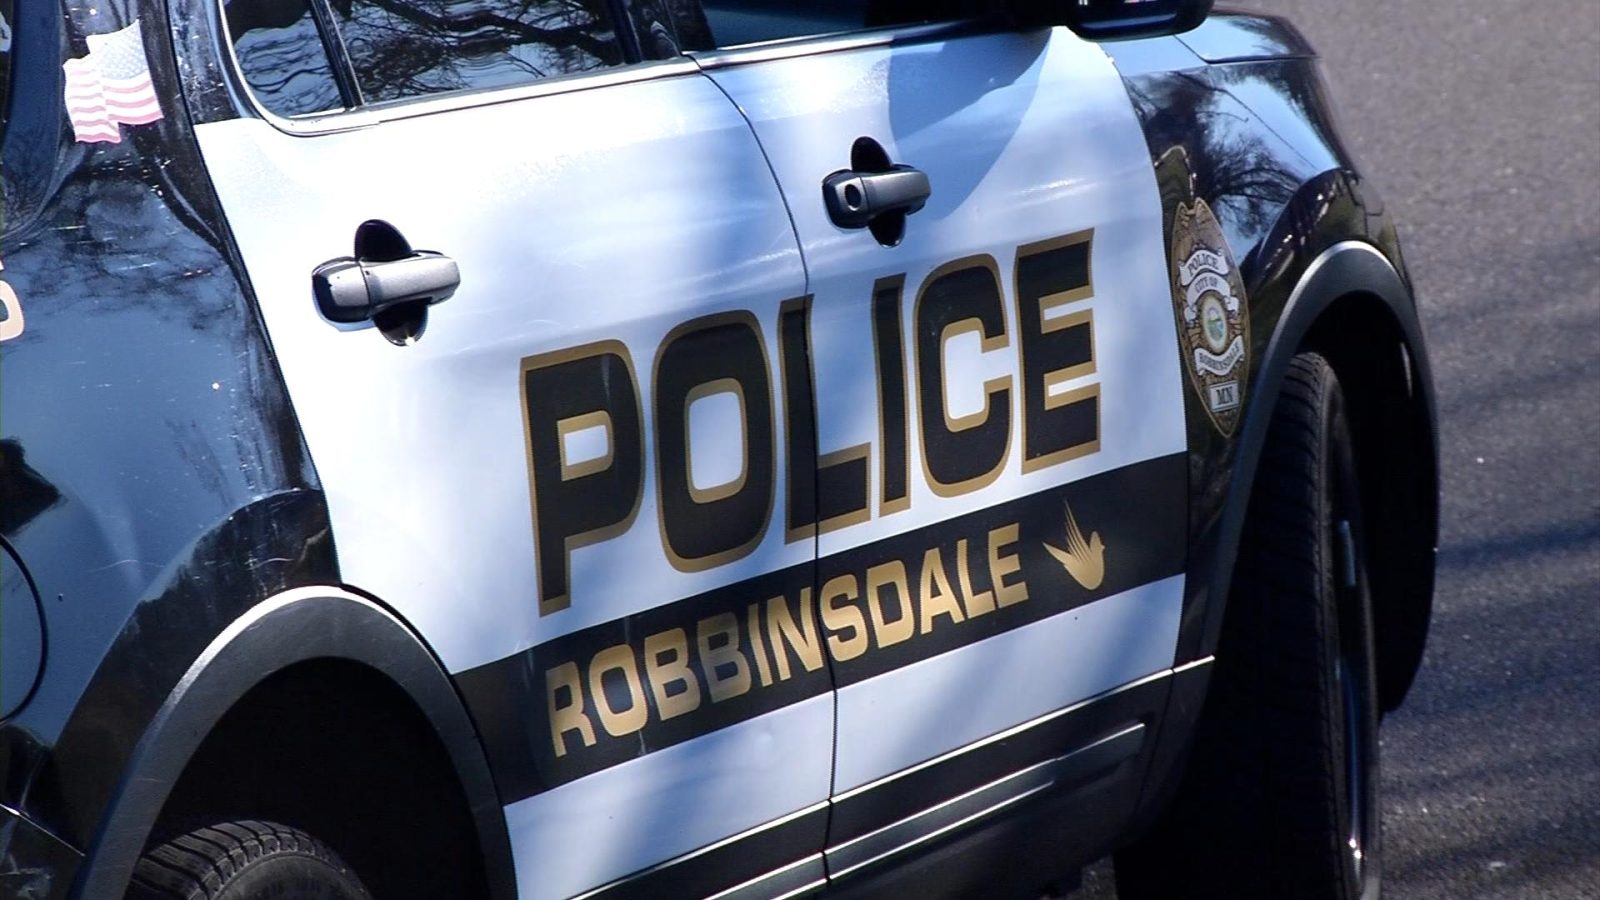 Robbinsdale police department fatal crash